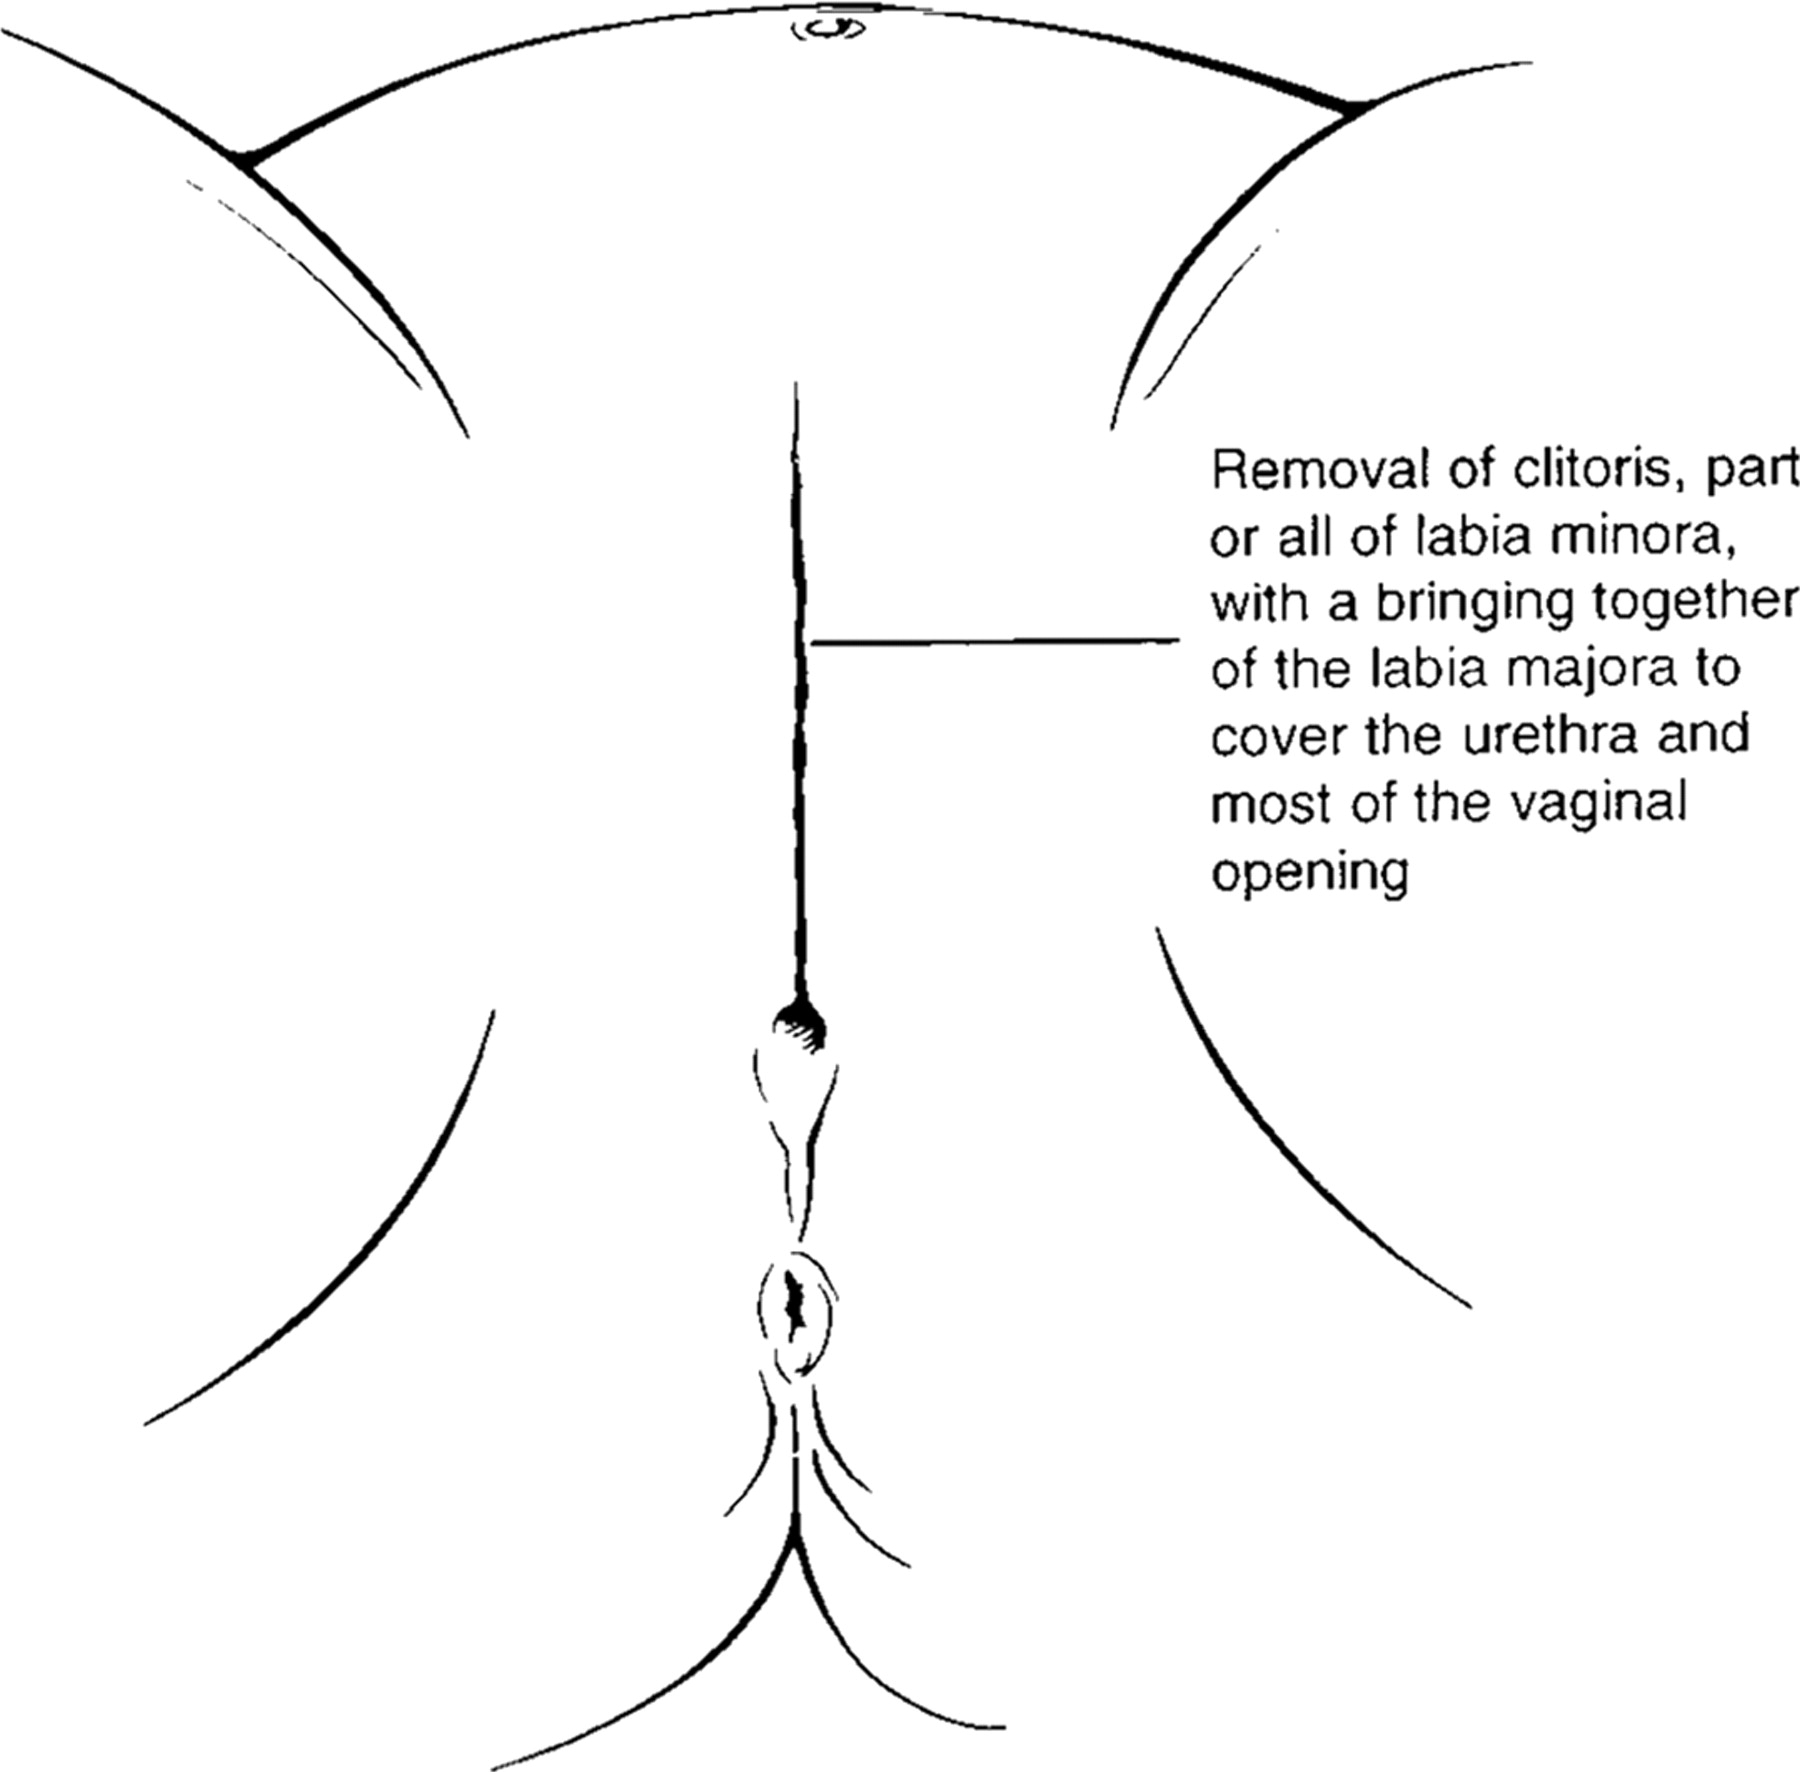 Women's Genitalia Diagram Ritual Genital Cutting Of Female Minors From The American Academy